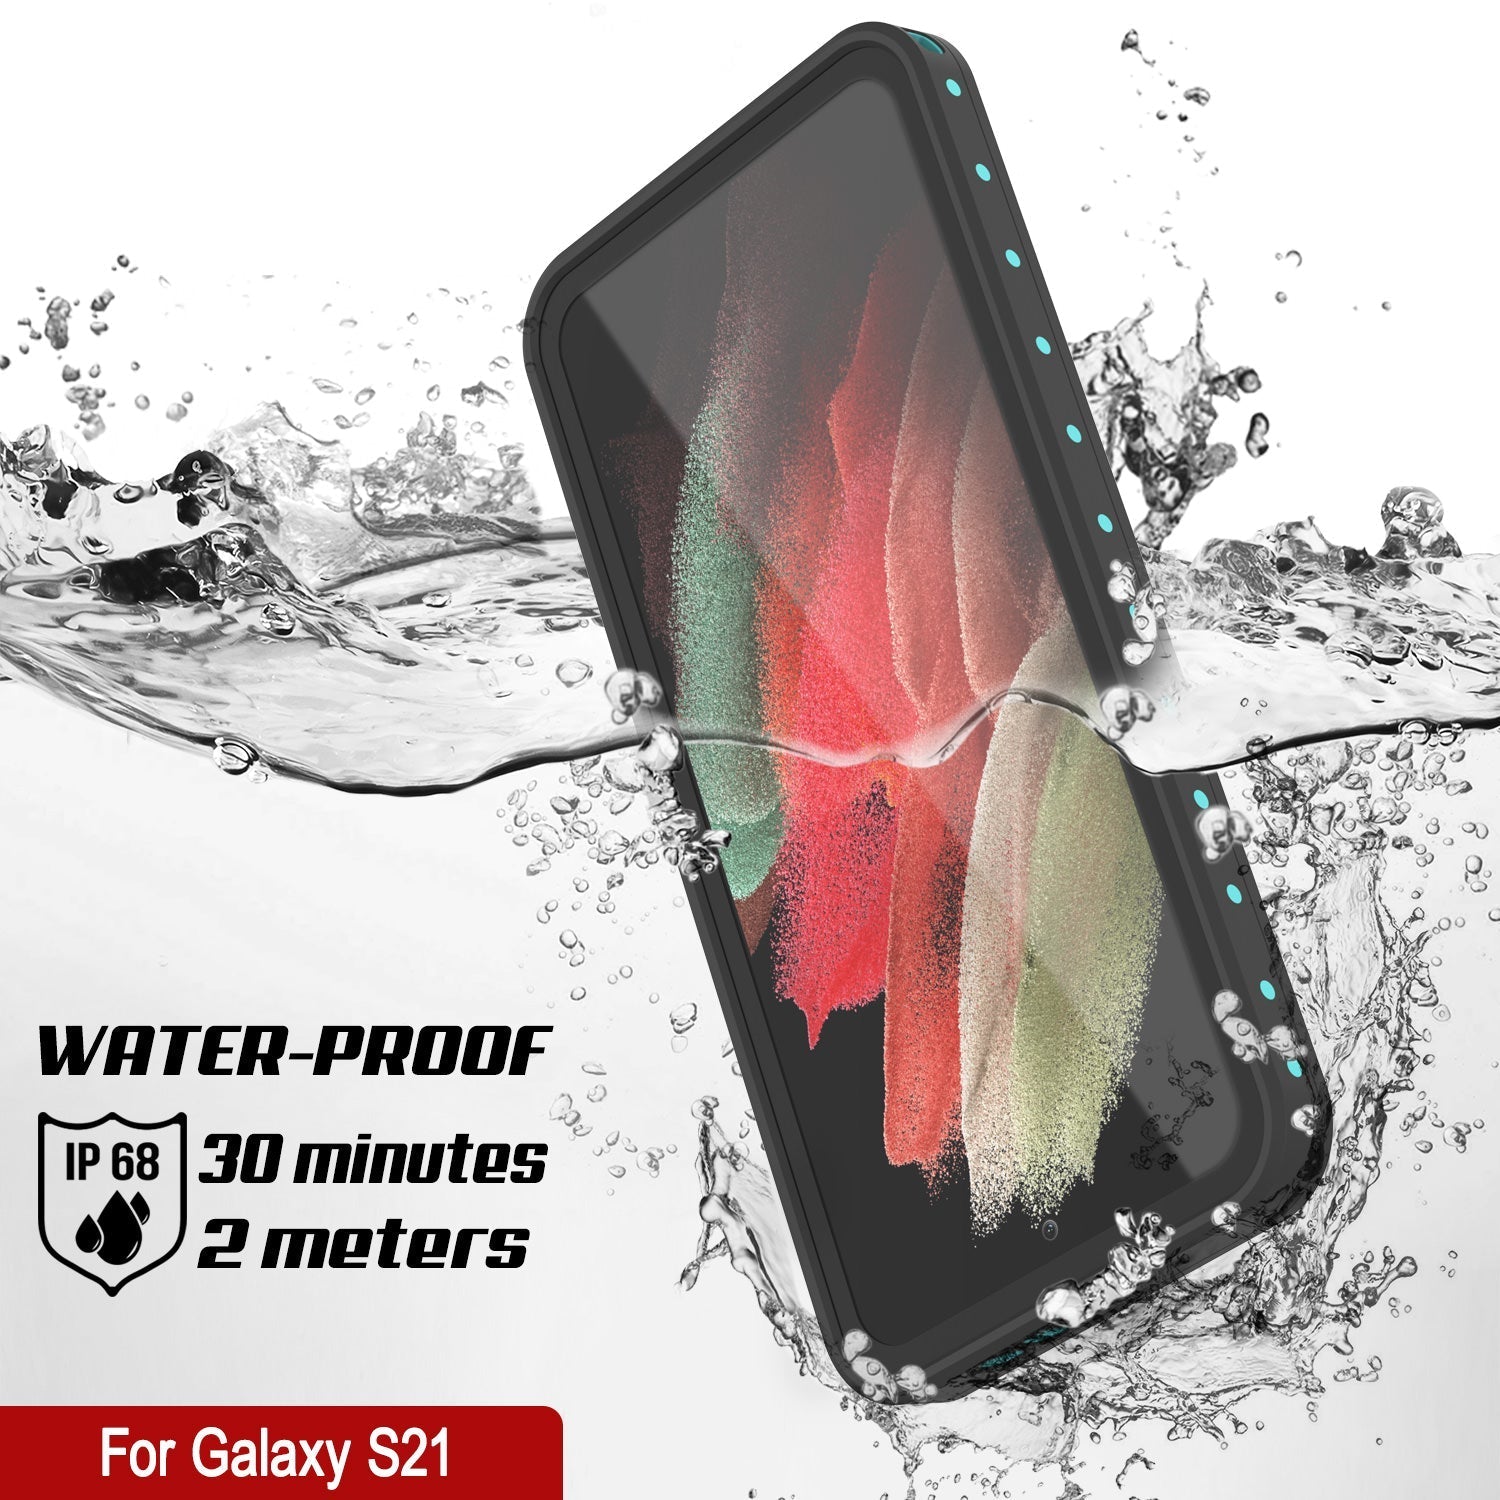 Galaxy S22 Waterproof Case PunkCase StudStar Teal Thin 6.6ft Underwater IP68 Shock/Snow Proof